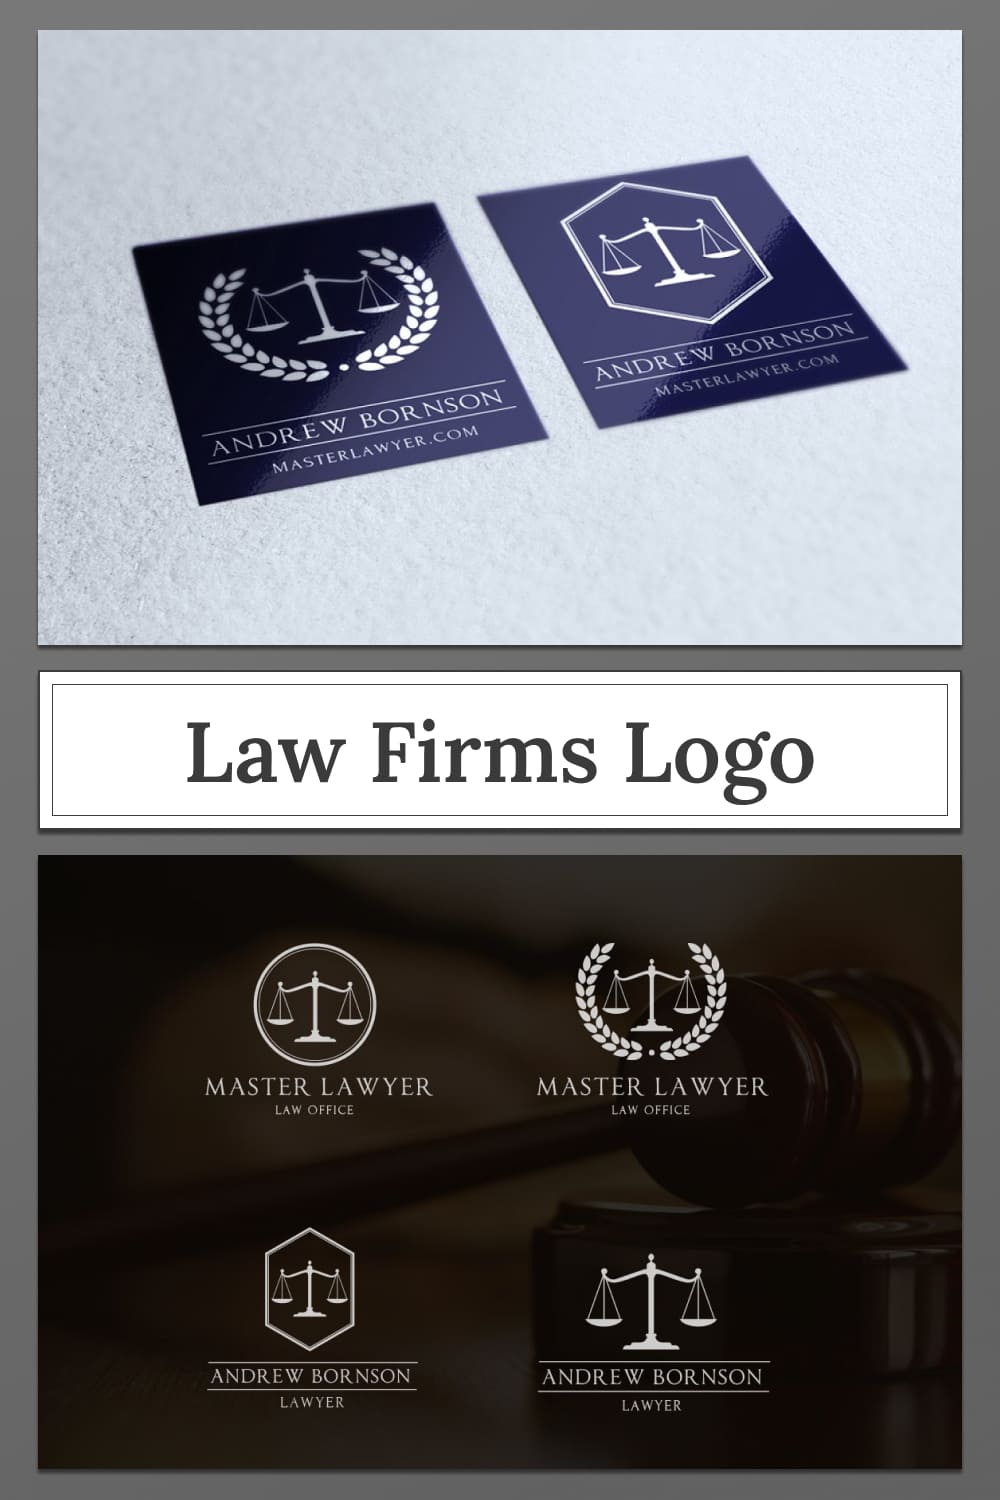 Law Firms Logo Design Template pinterest image.